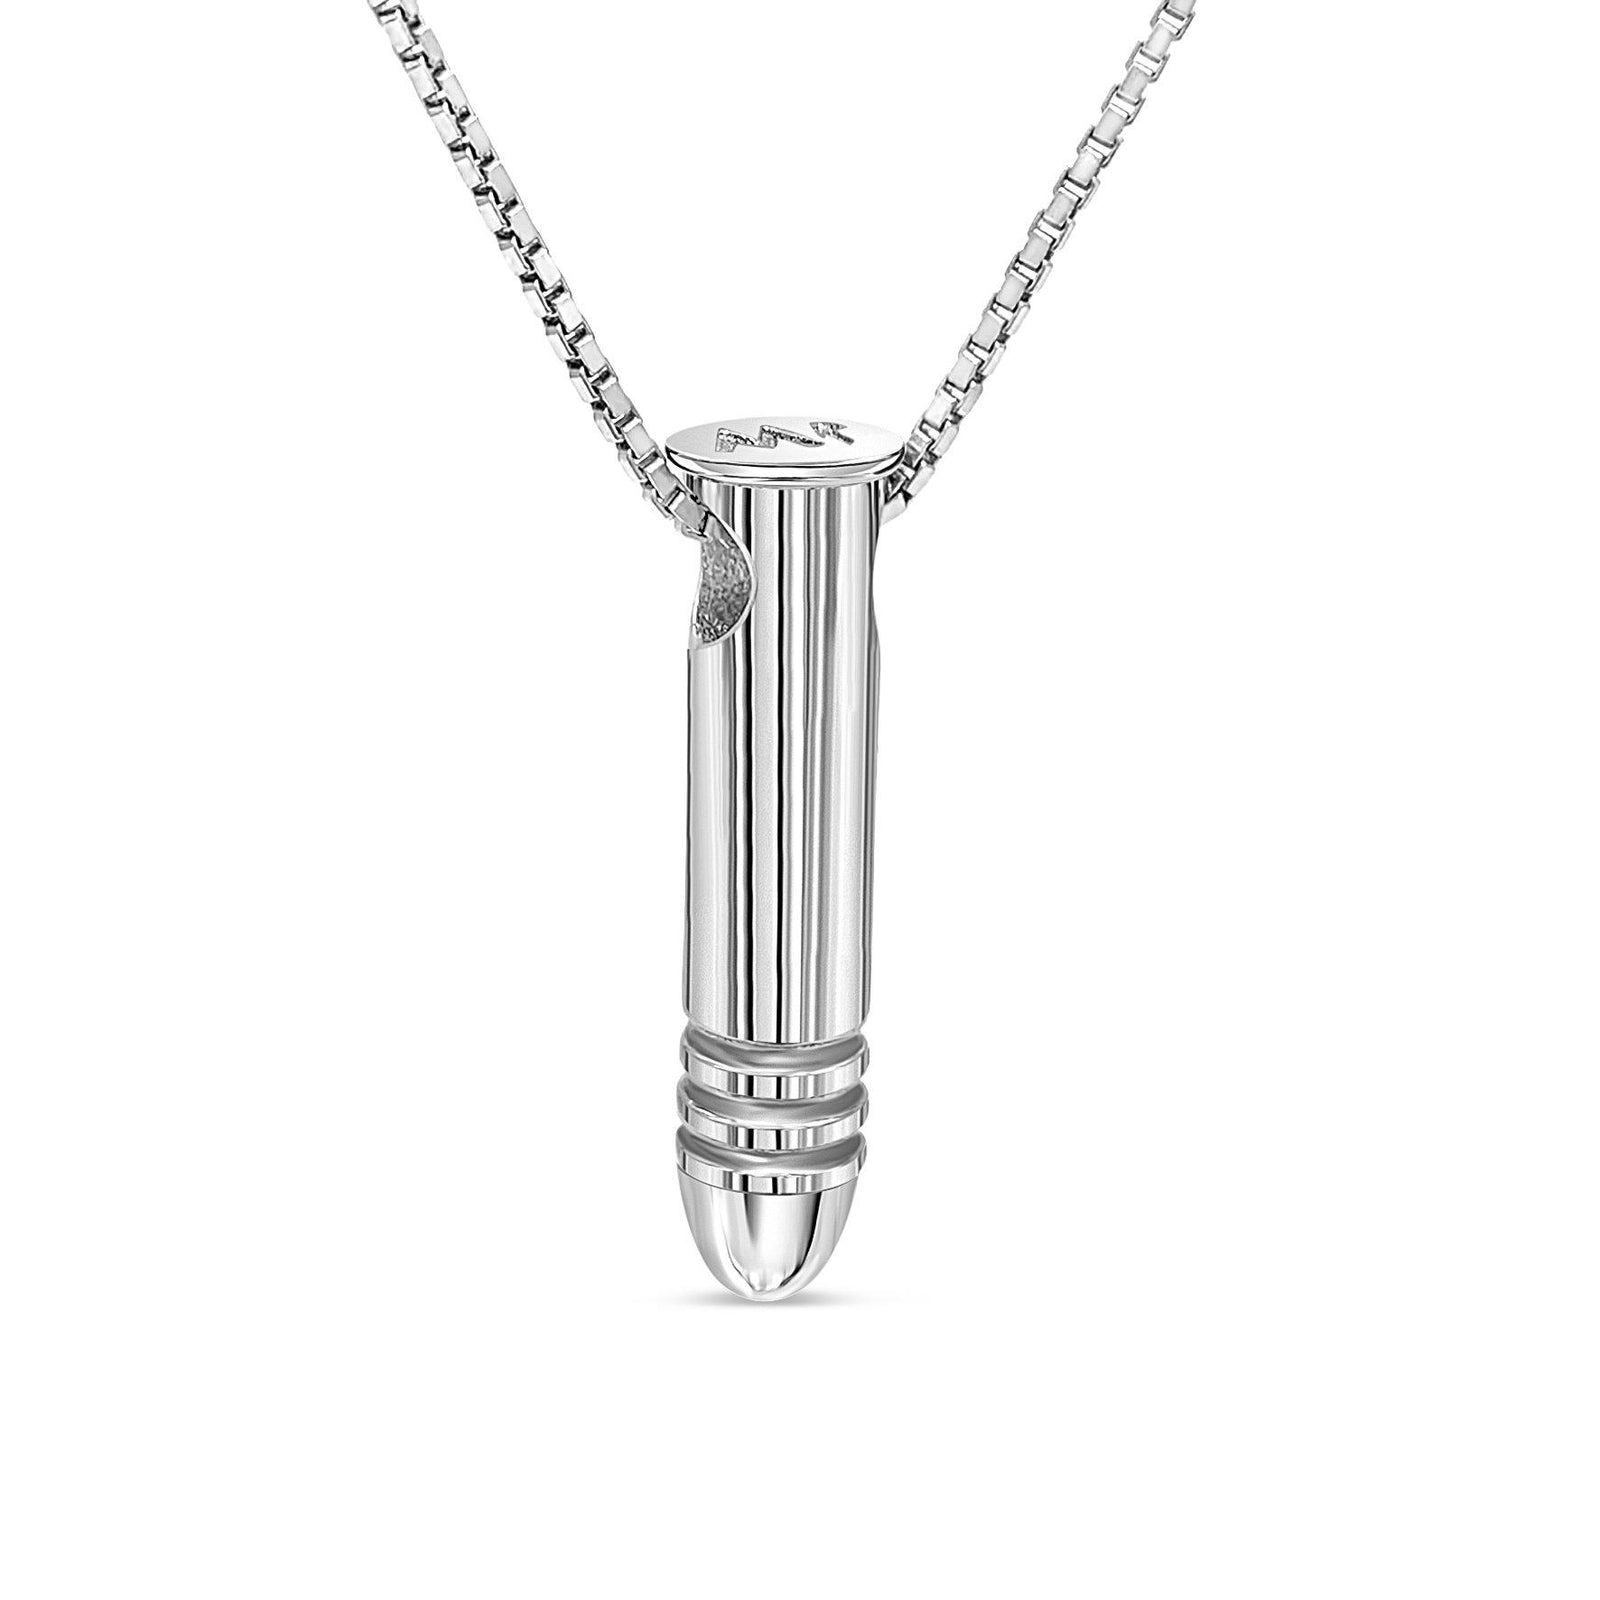 Bullet Blossom Necklace | Women's Gun Jewelry | Gun Goddess Sapphire Crystal / Both Chains (+$5) / No